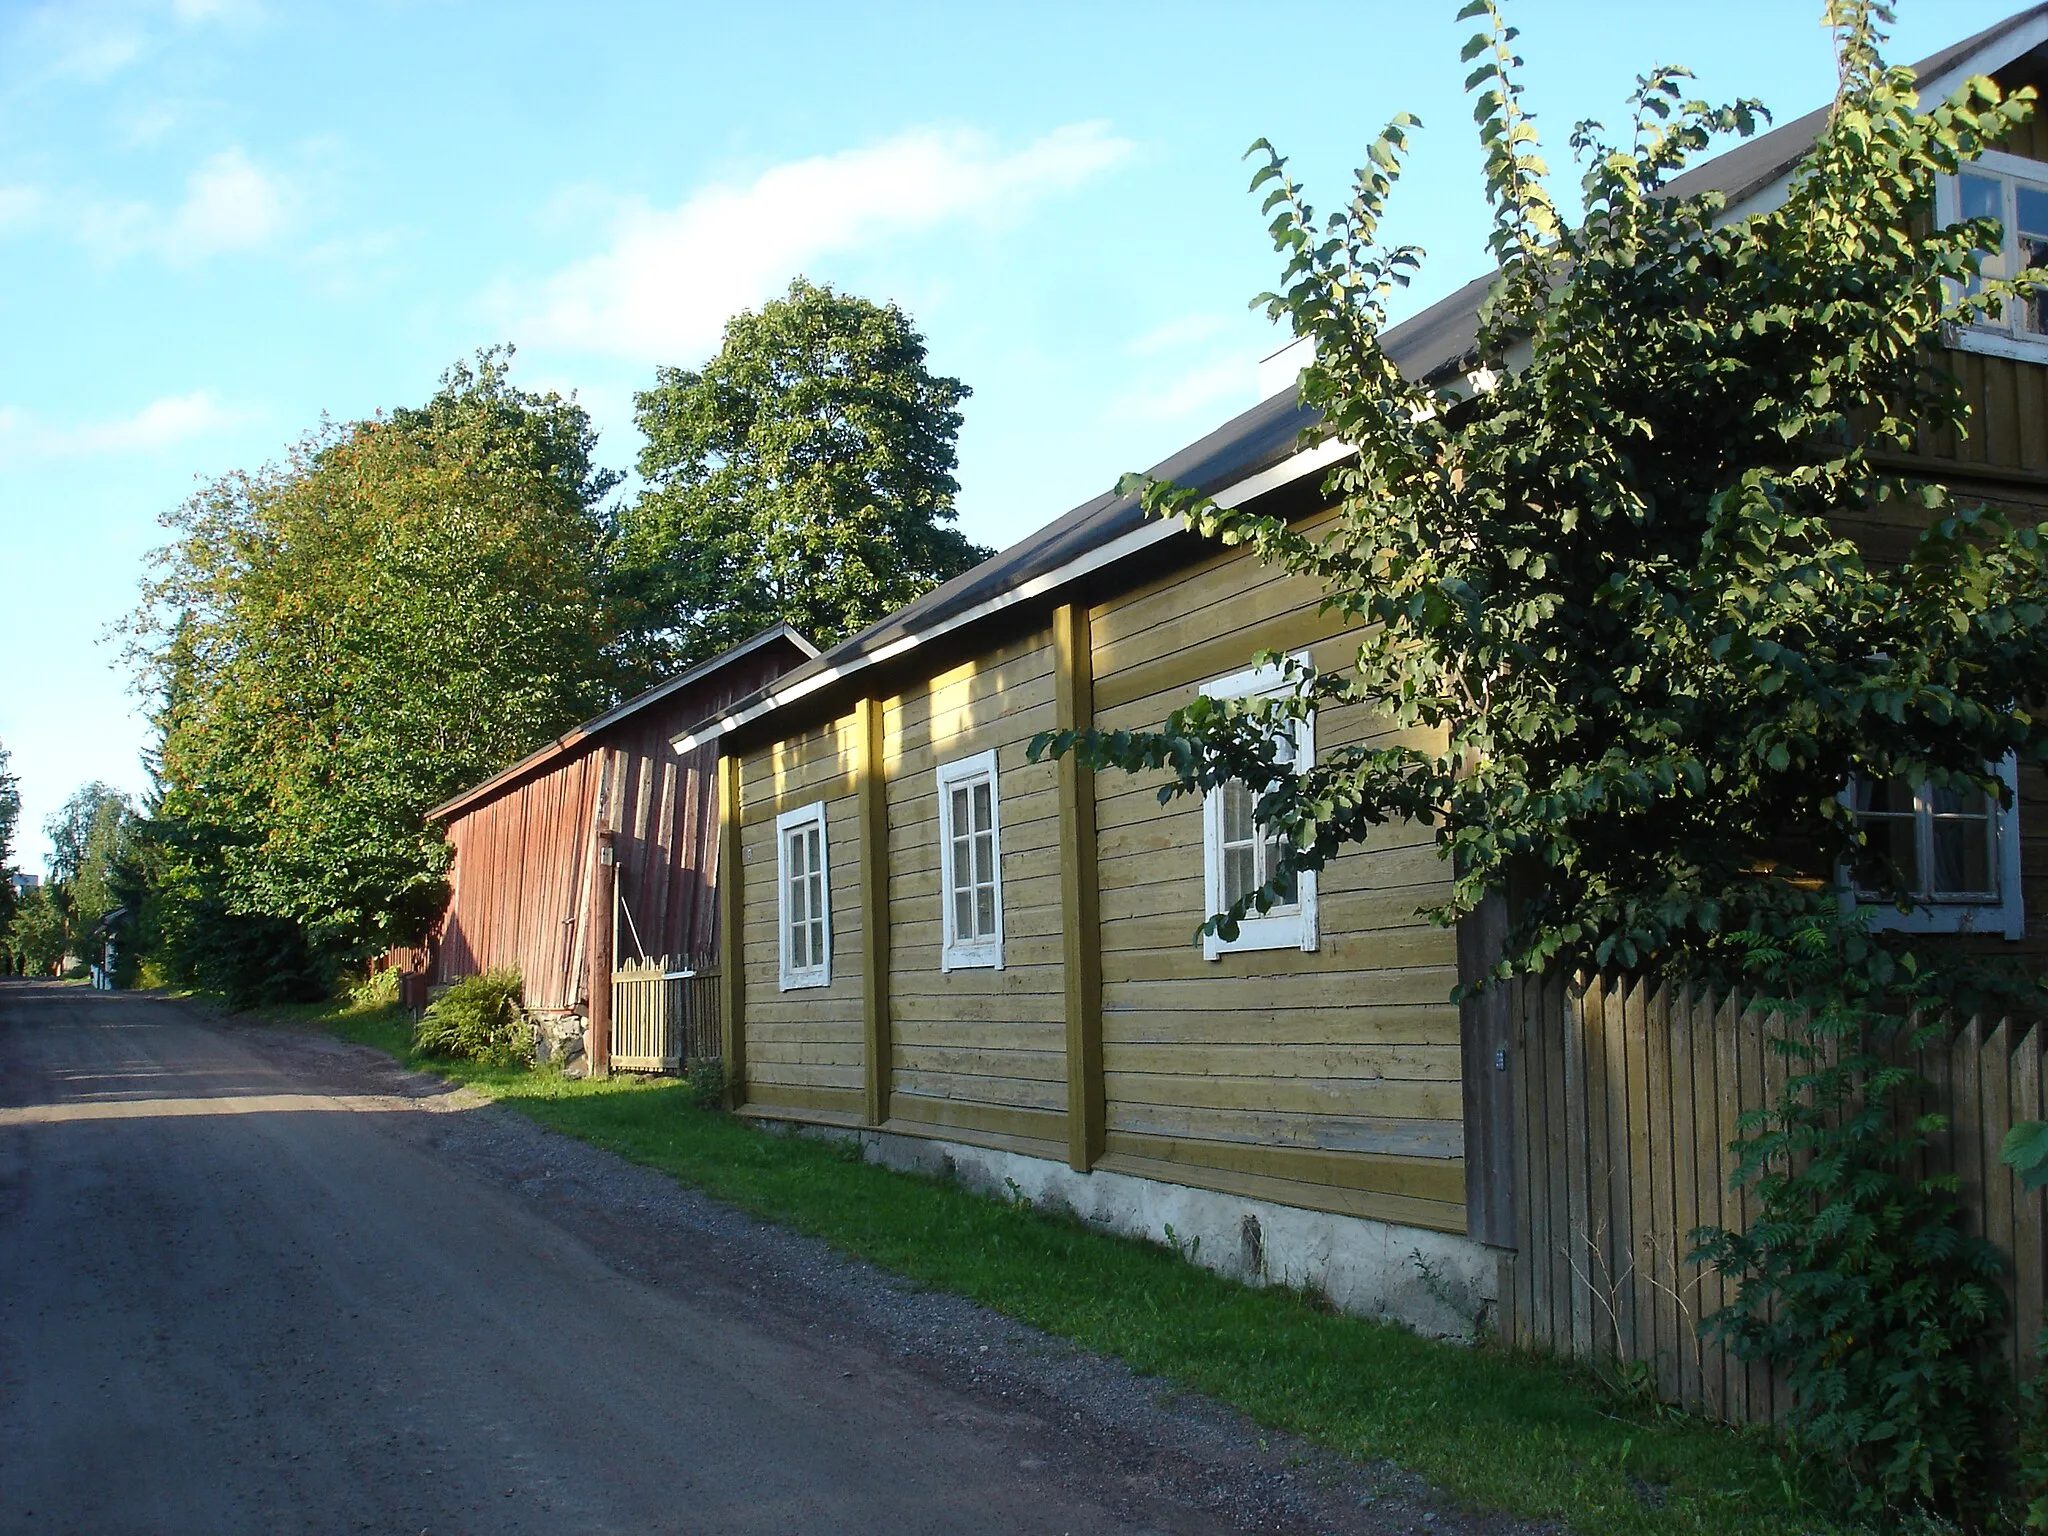 Photo showing: The Kalliomäki wooden house quarter in Forssa